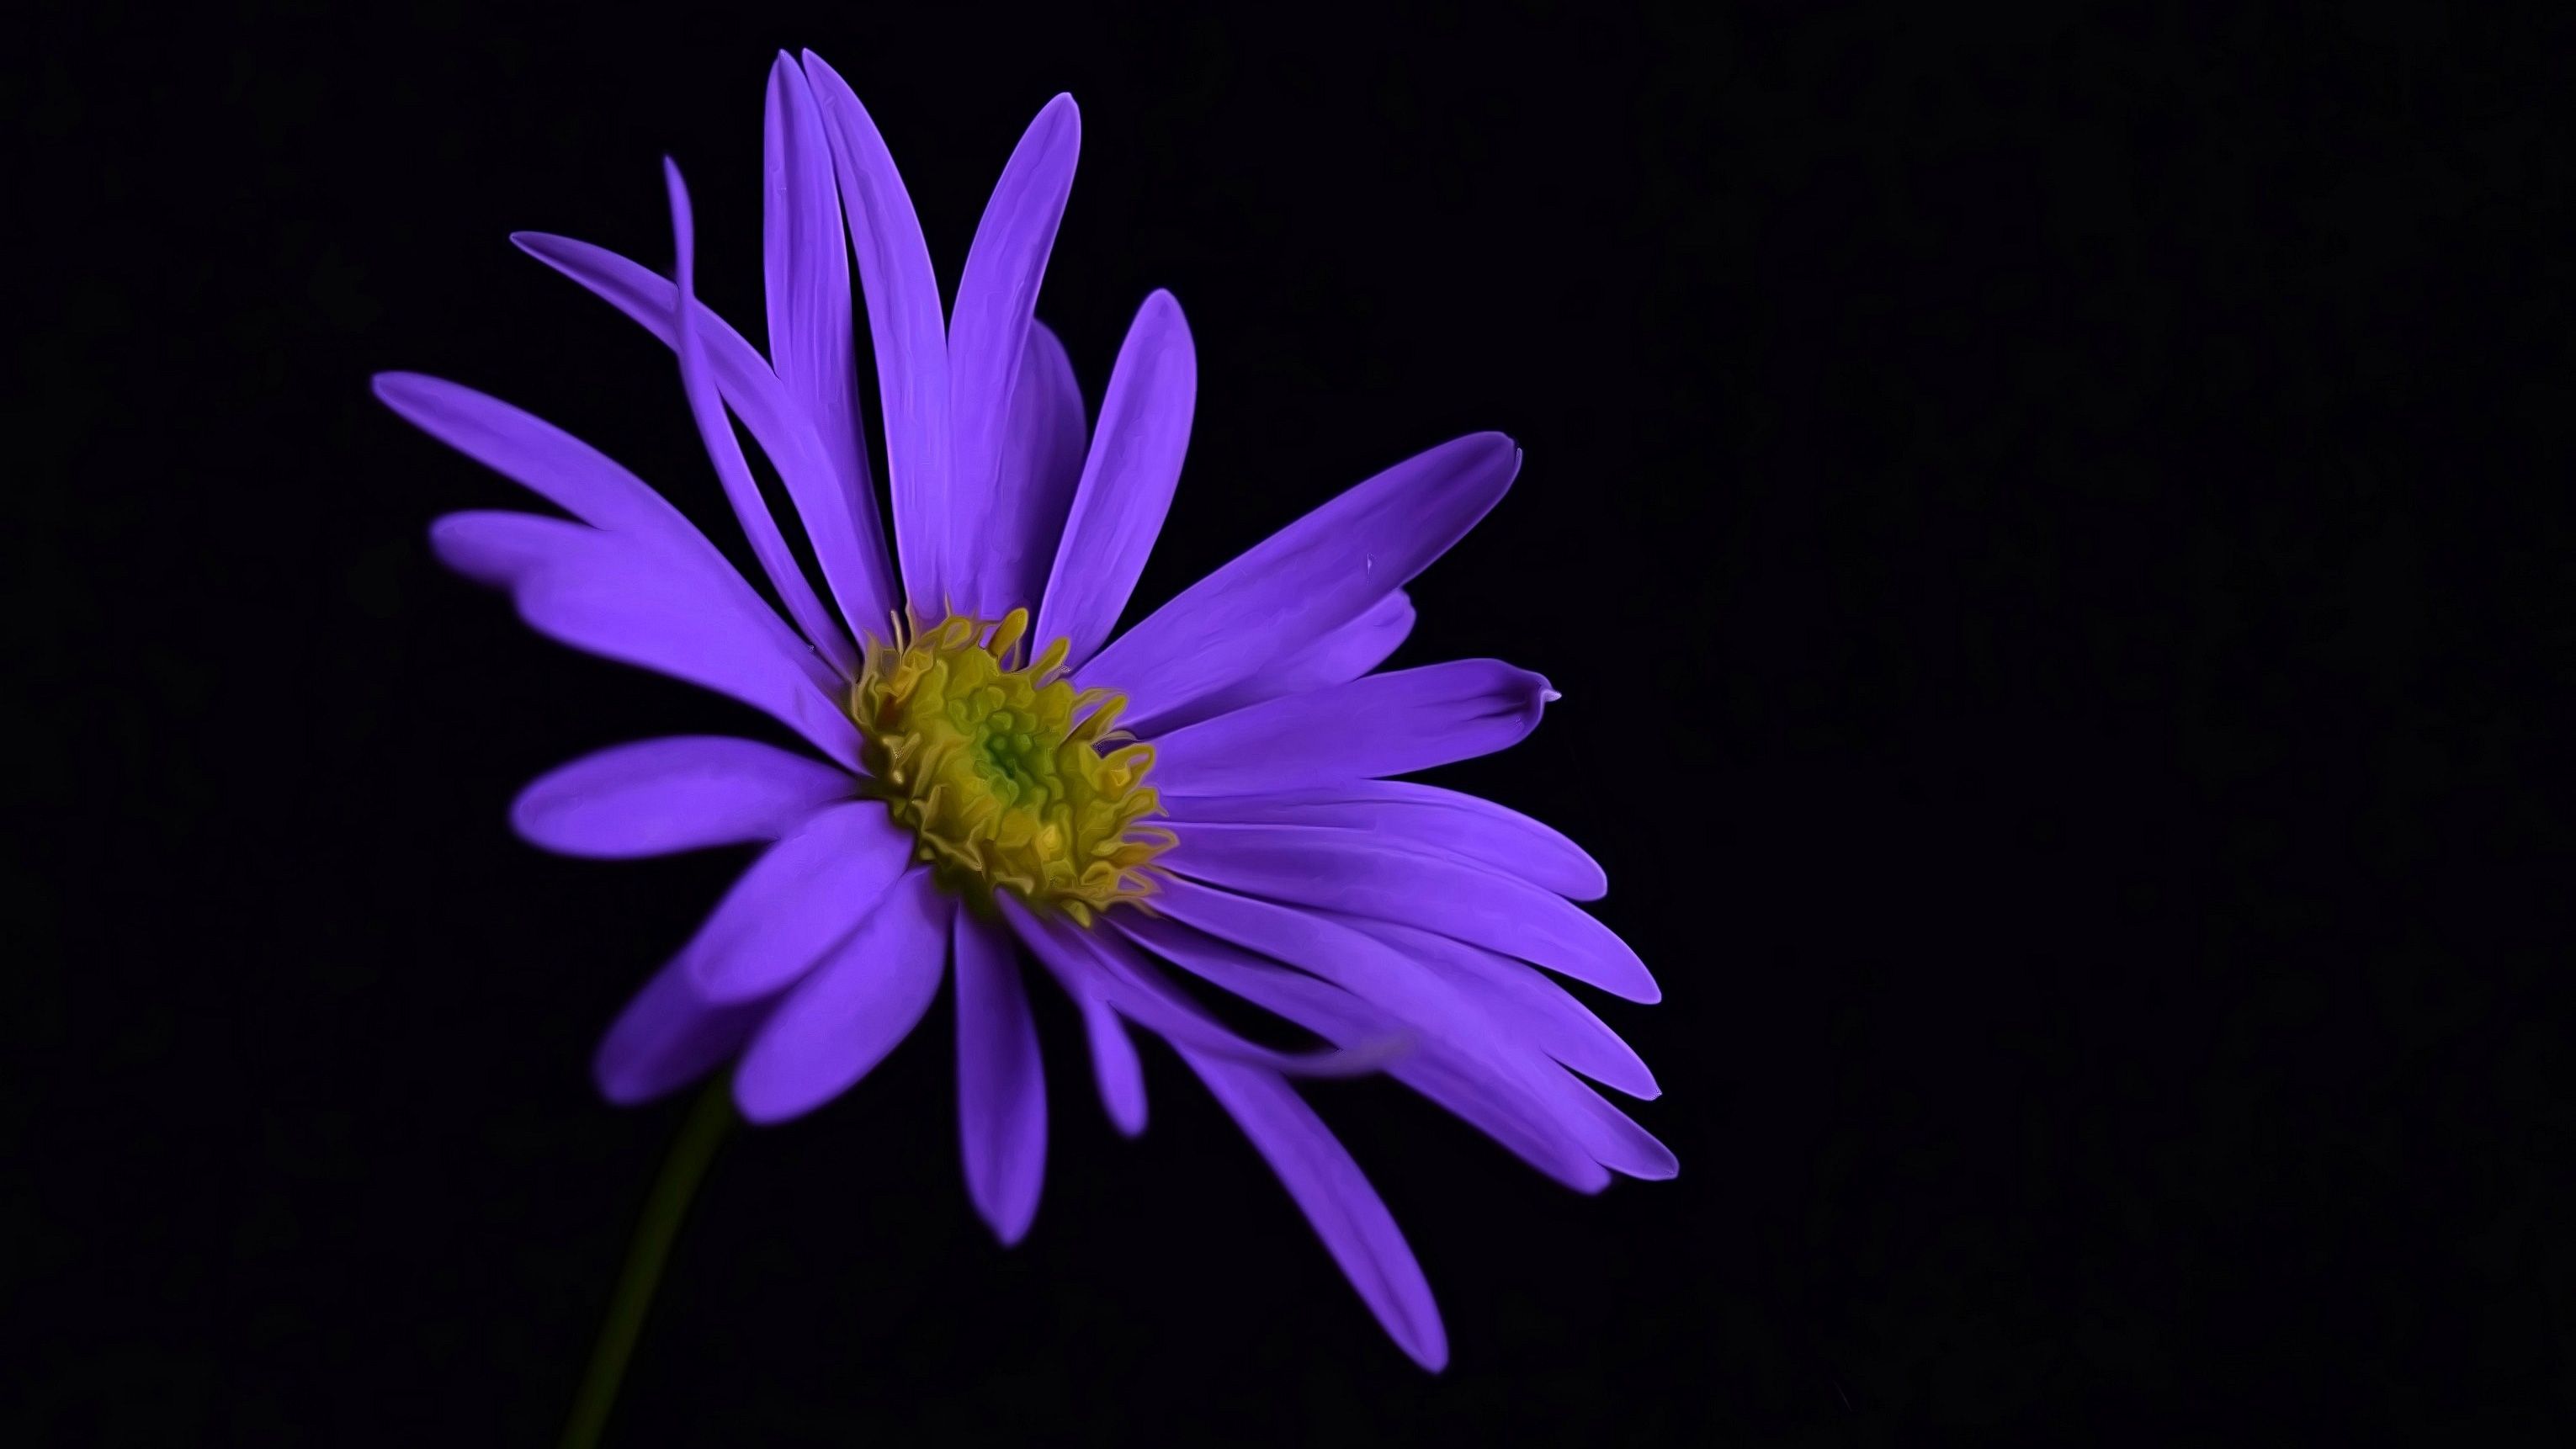 Purple Flower Blossom, HD Flowers, 4k Wallpaper, Image